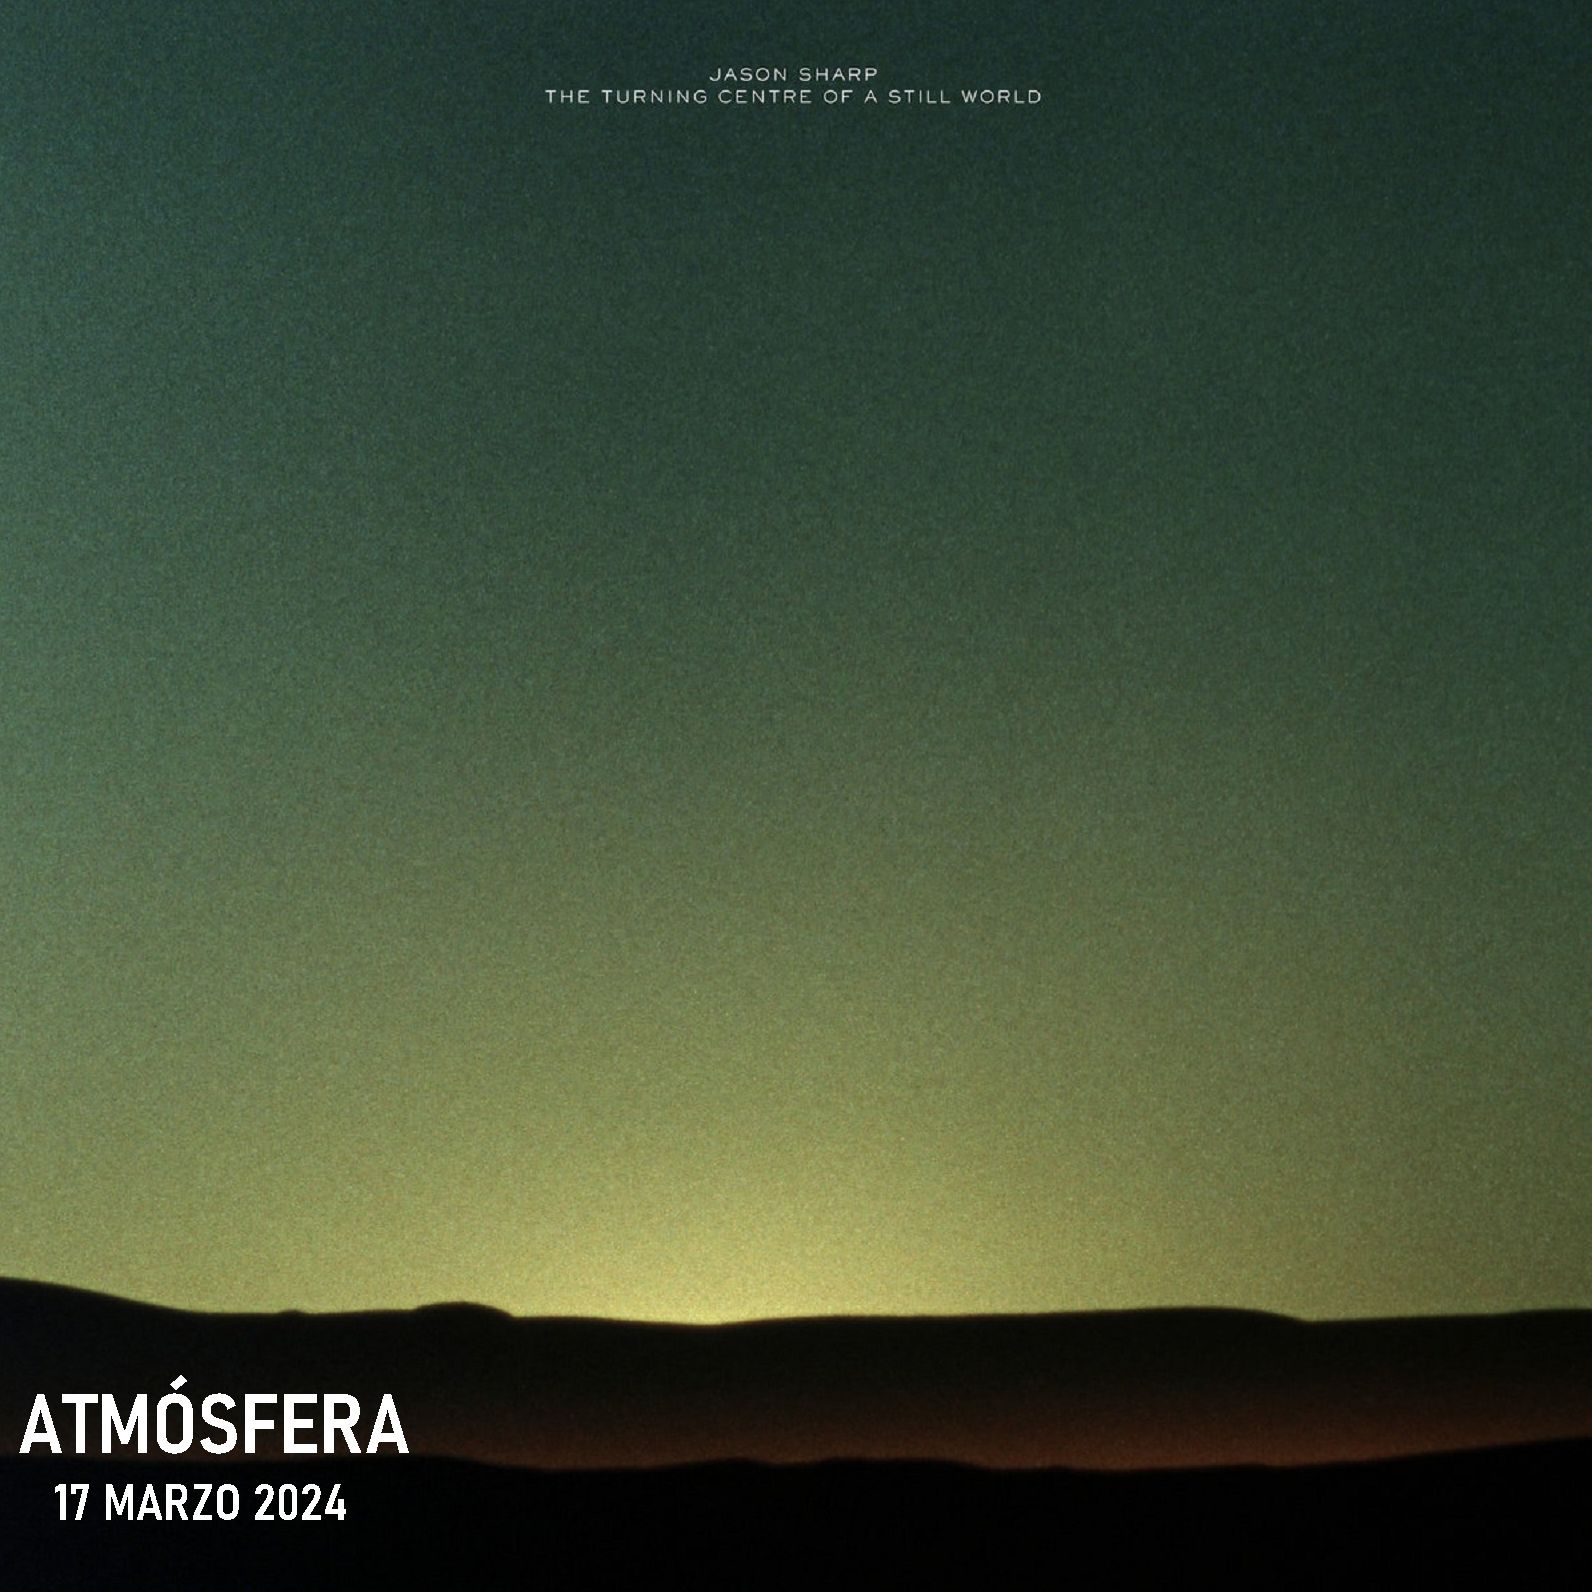 Atmósfera - Zane Trow, Stèphane Garin - 17/03/24